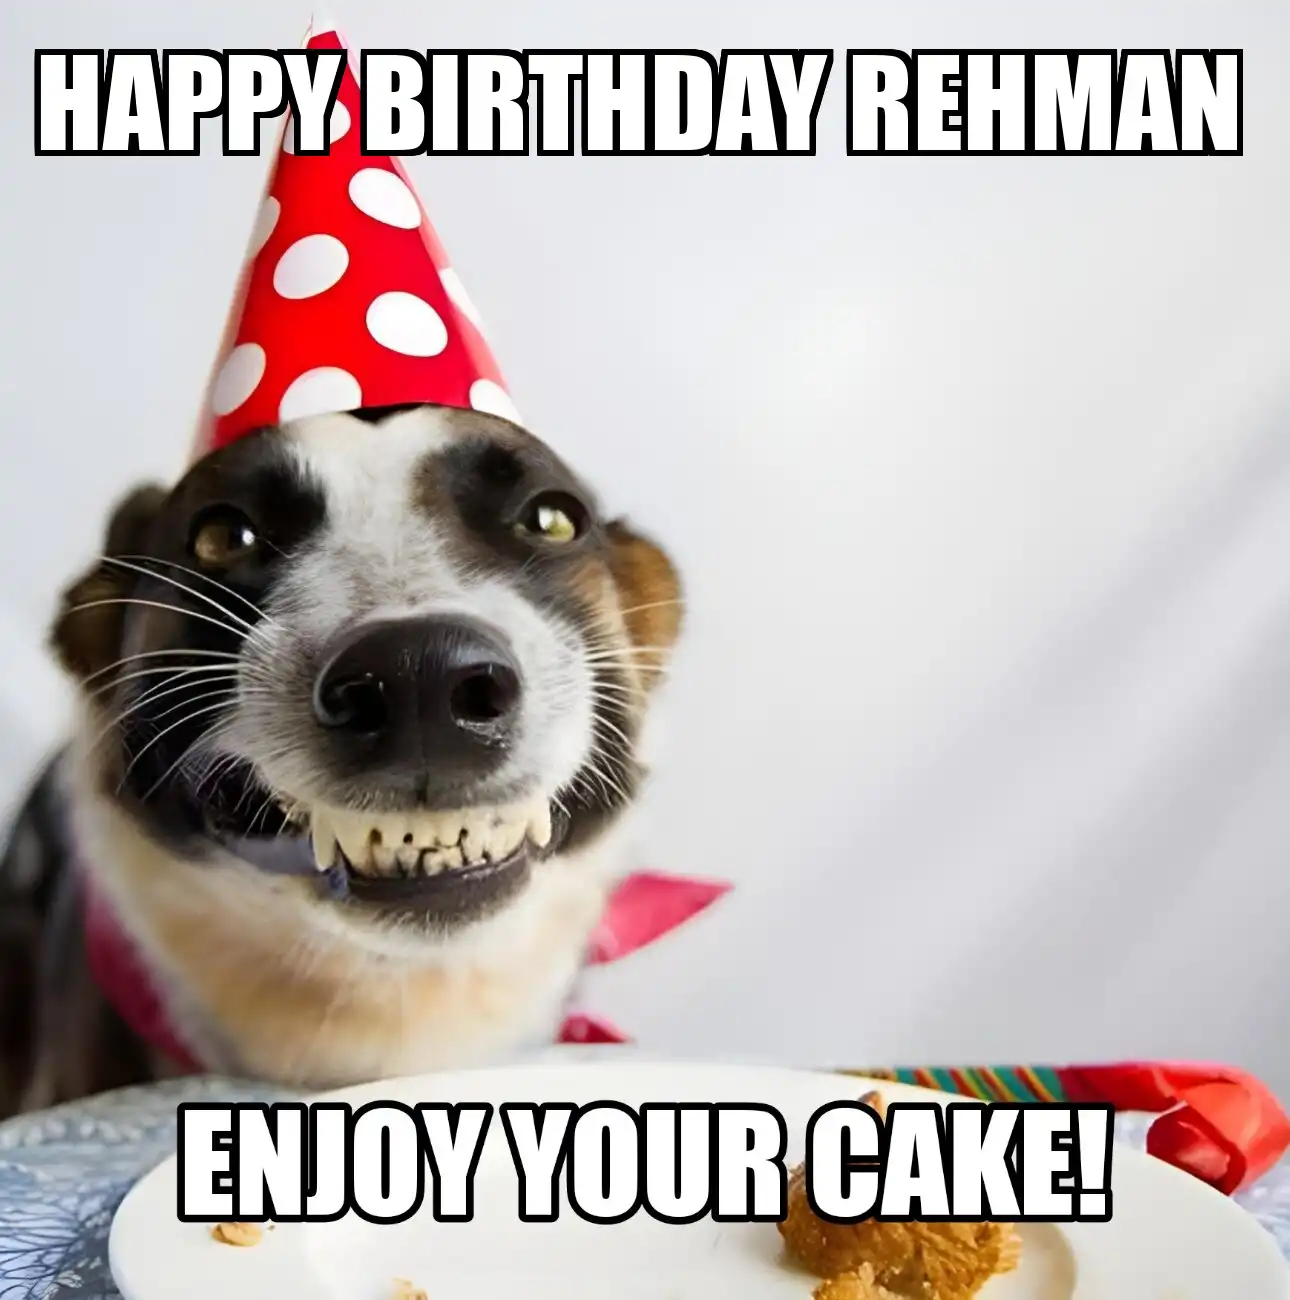 Happy Birthday Rehman Enjoy Your Cake Dog Meme